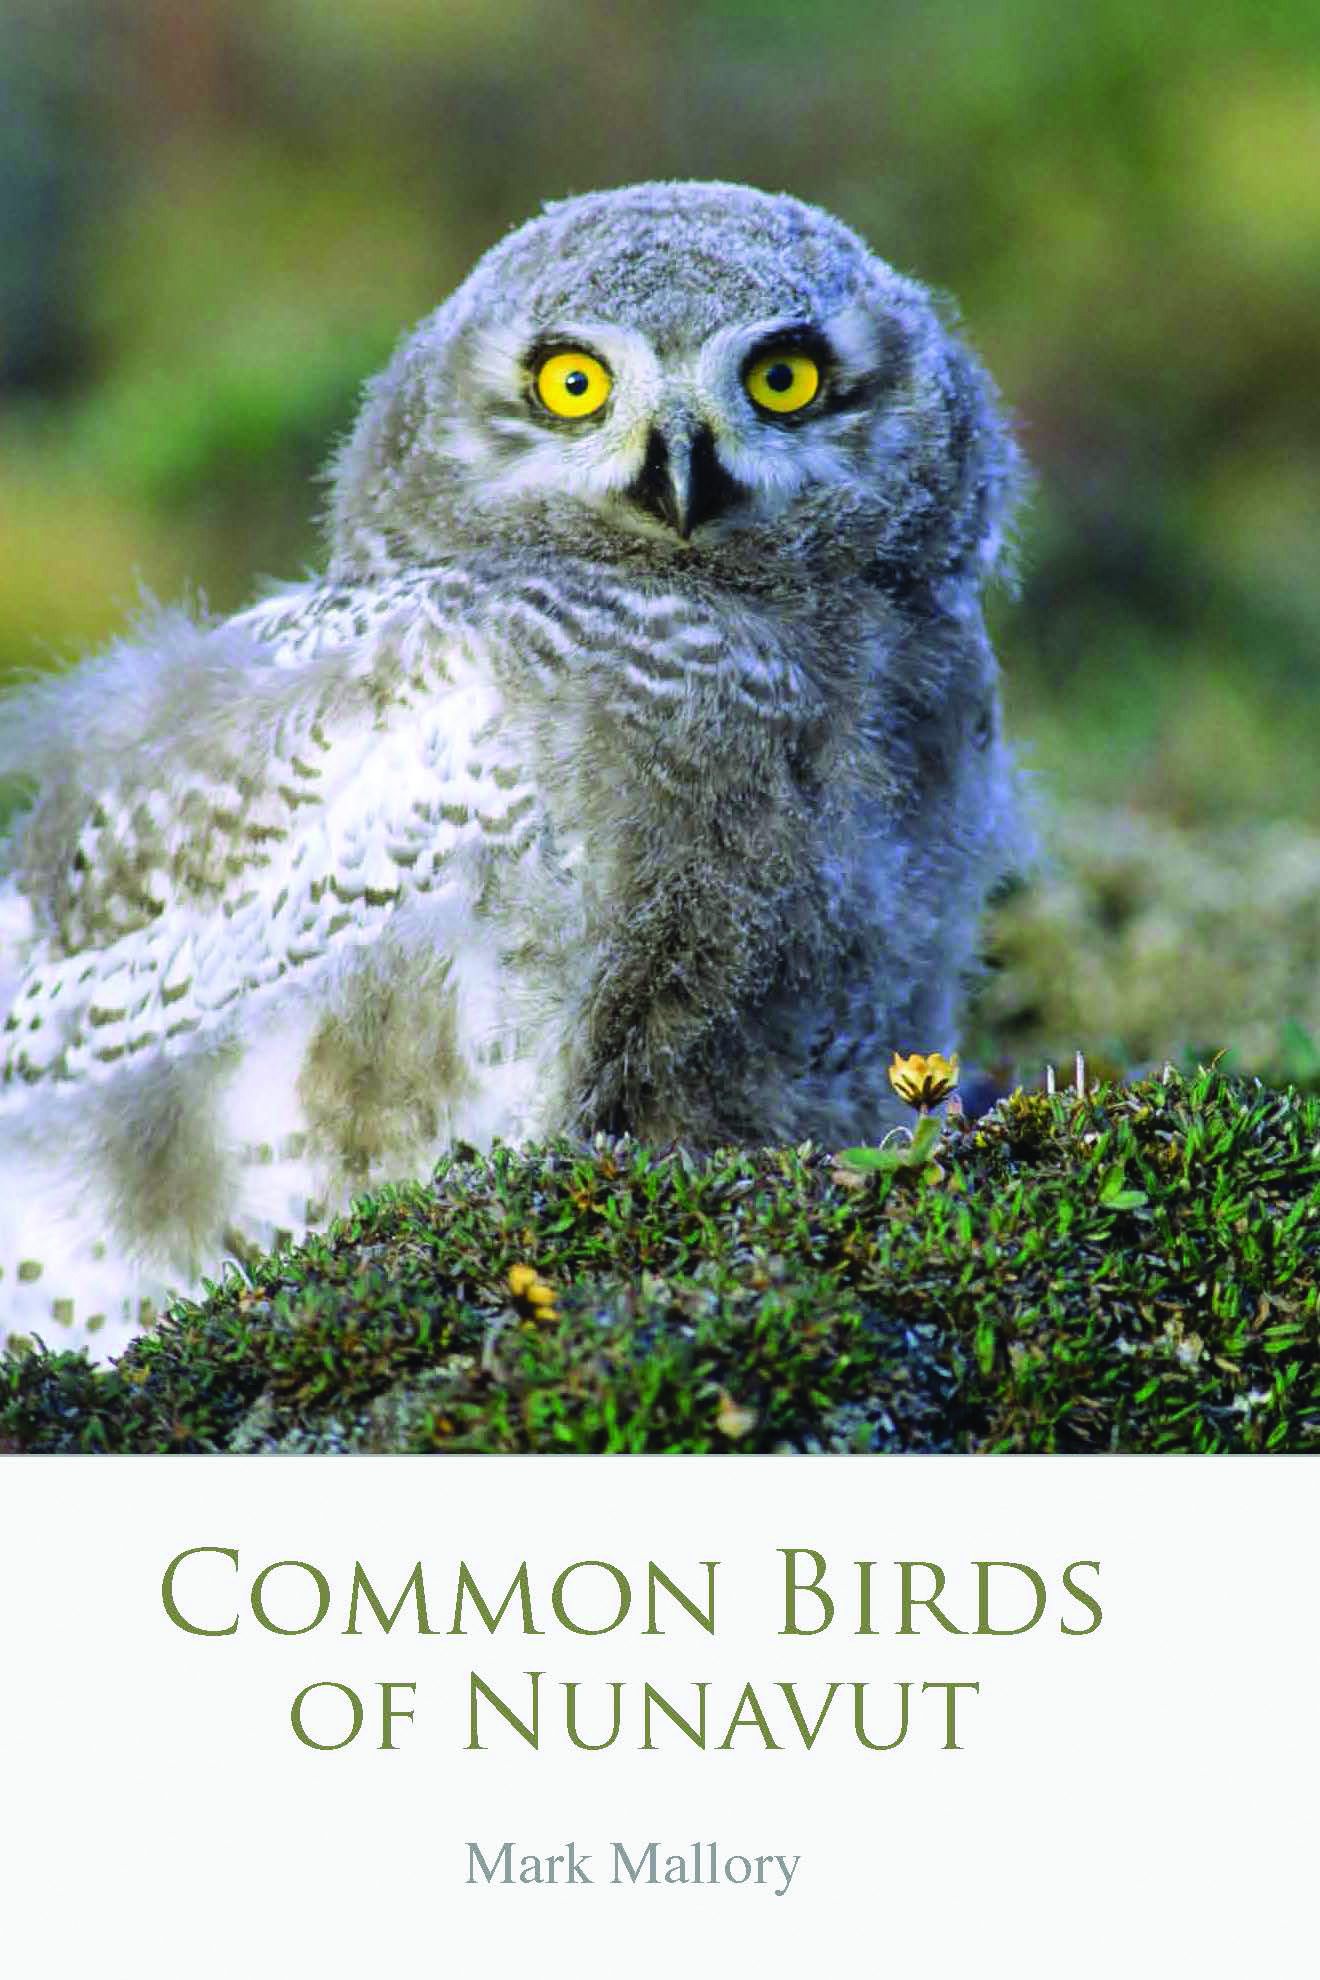 Common Birds of Nunavut